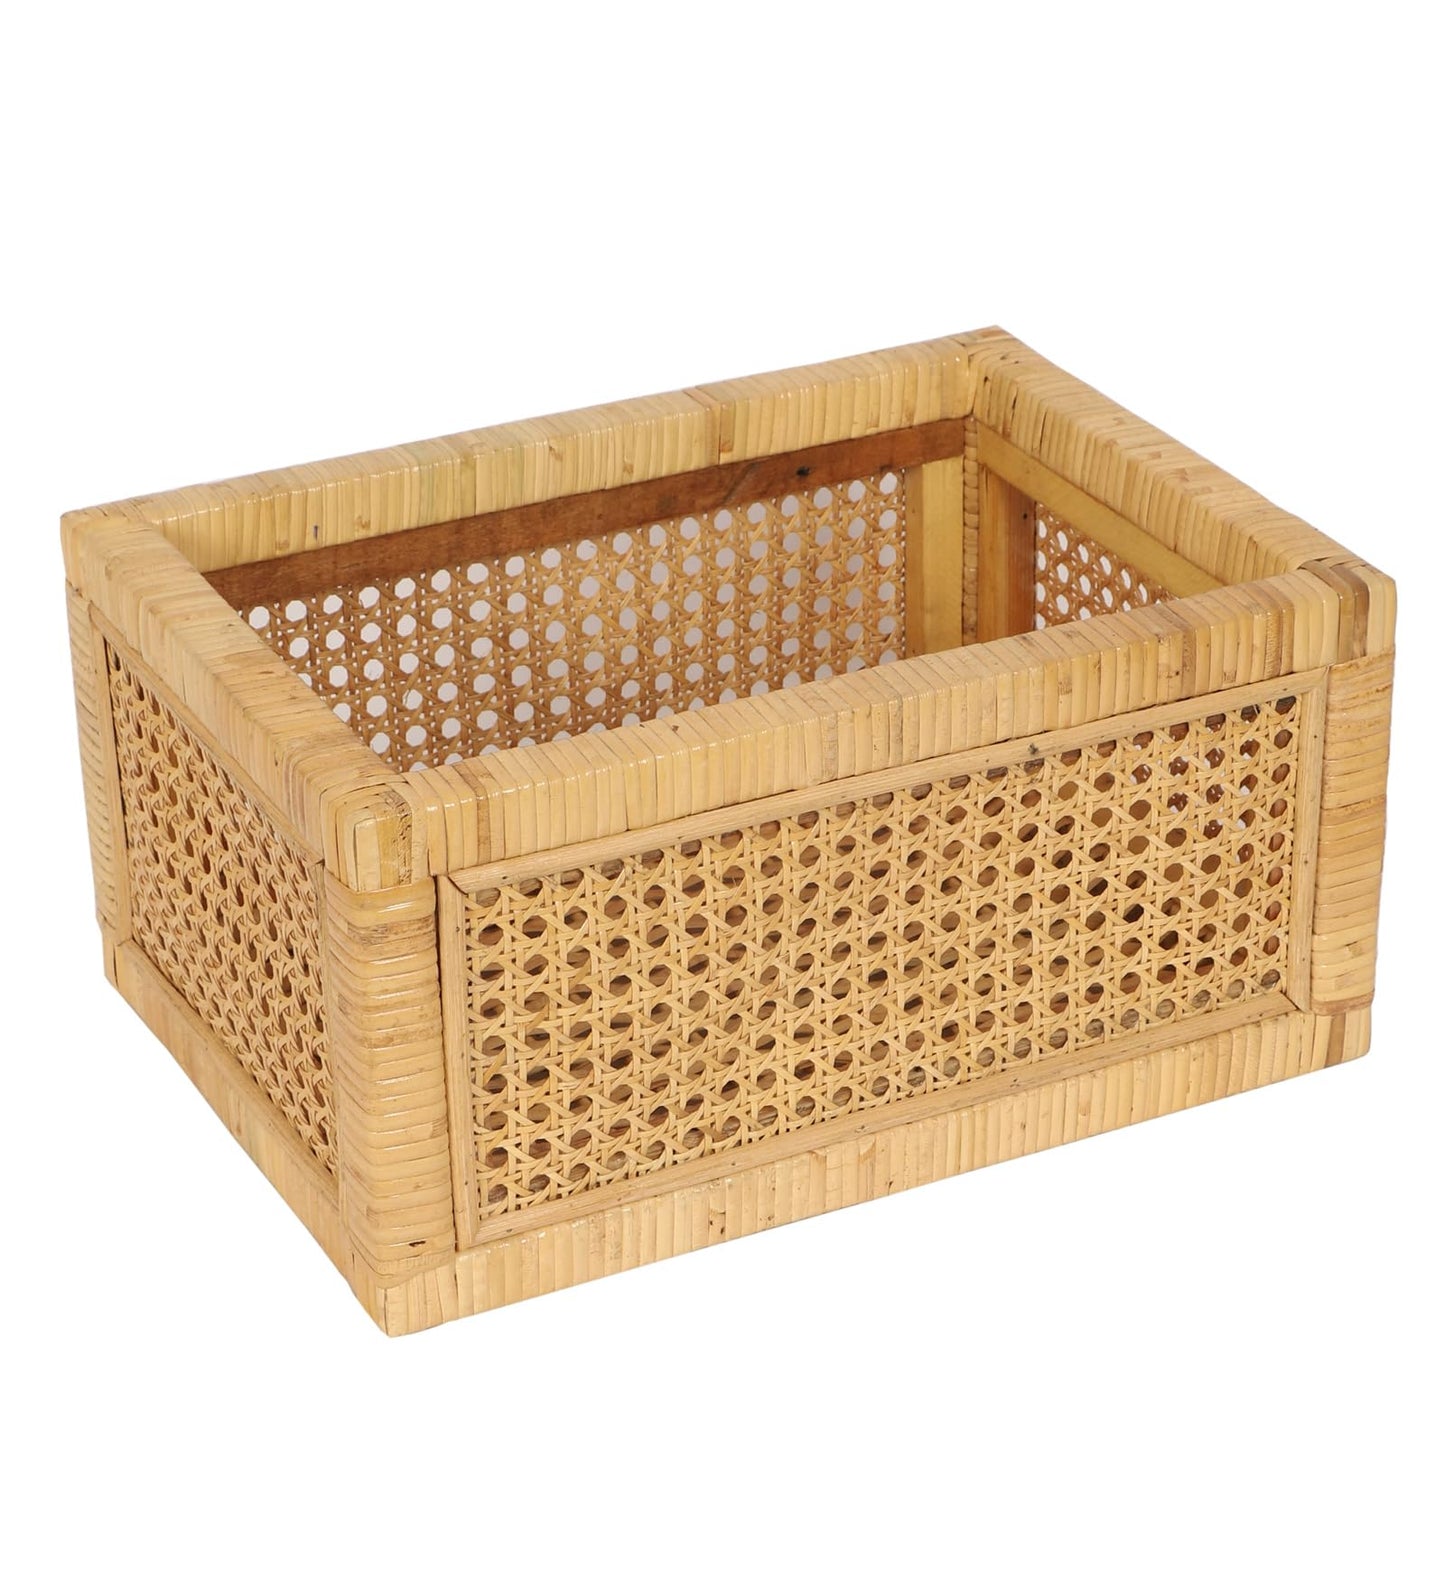 Akway Rattan cane webbing Storage basket | Wicker basket for storage organizer | Kauna Grass storage basket For Home | Kitchn Living Room - (Large, Dark Brown)- Akway